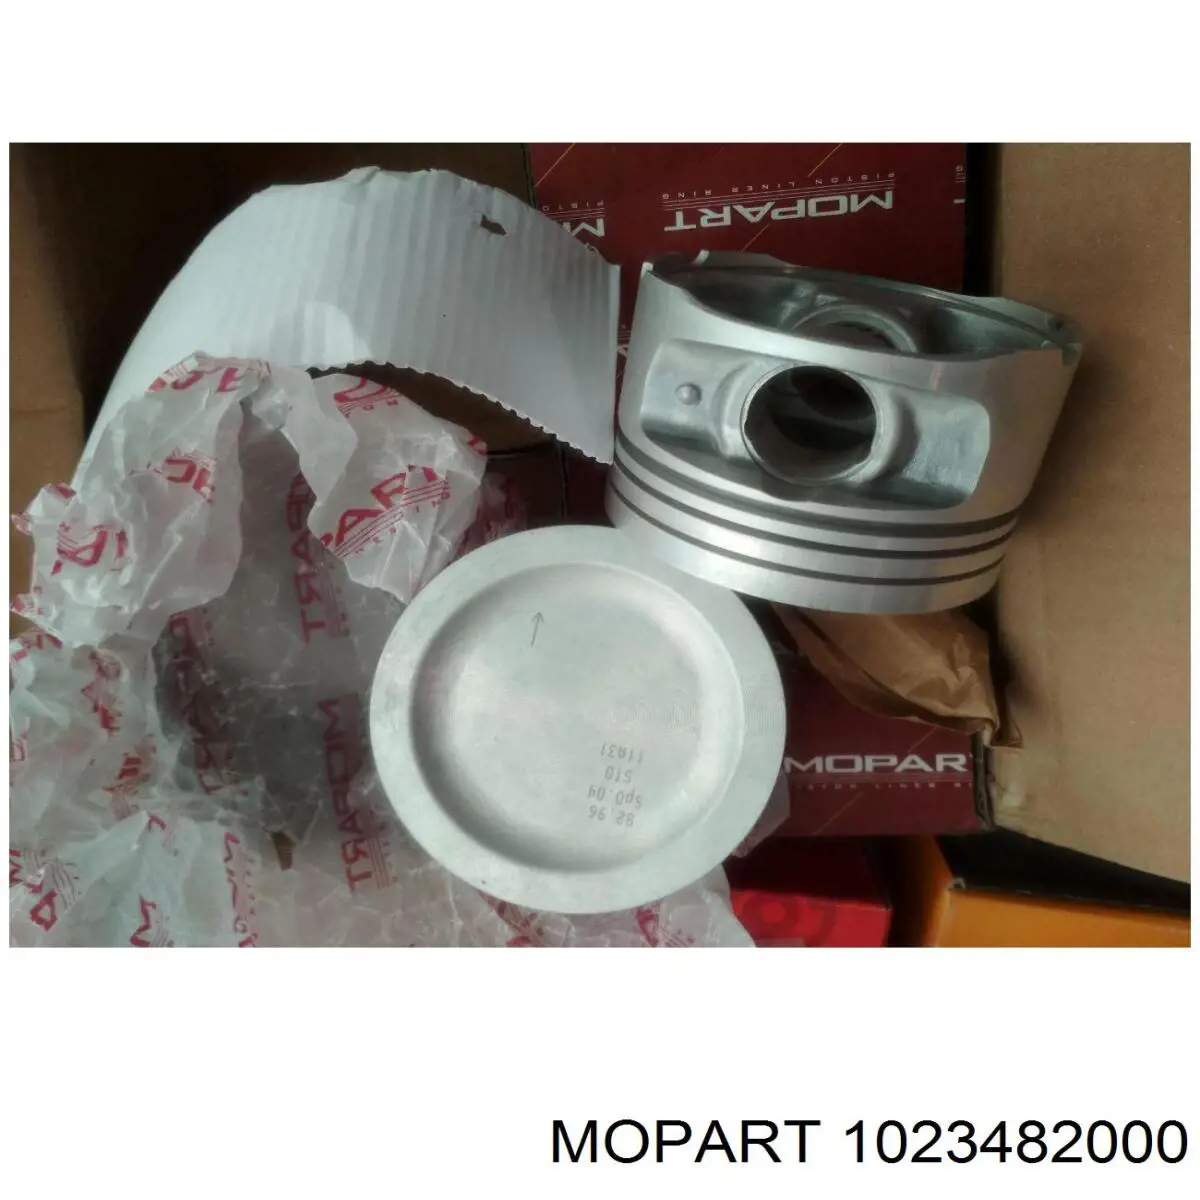 34820 00 Mopart поршень в комплекте на 1 цилиндр, std